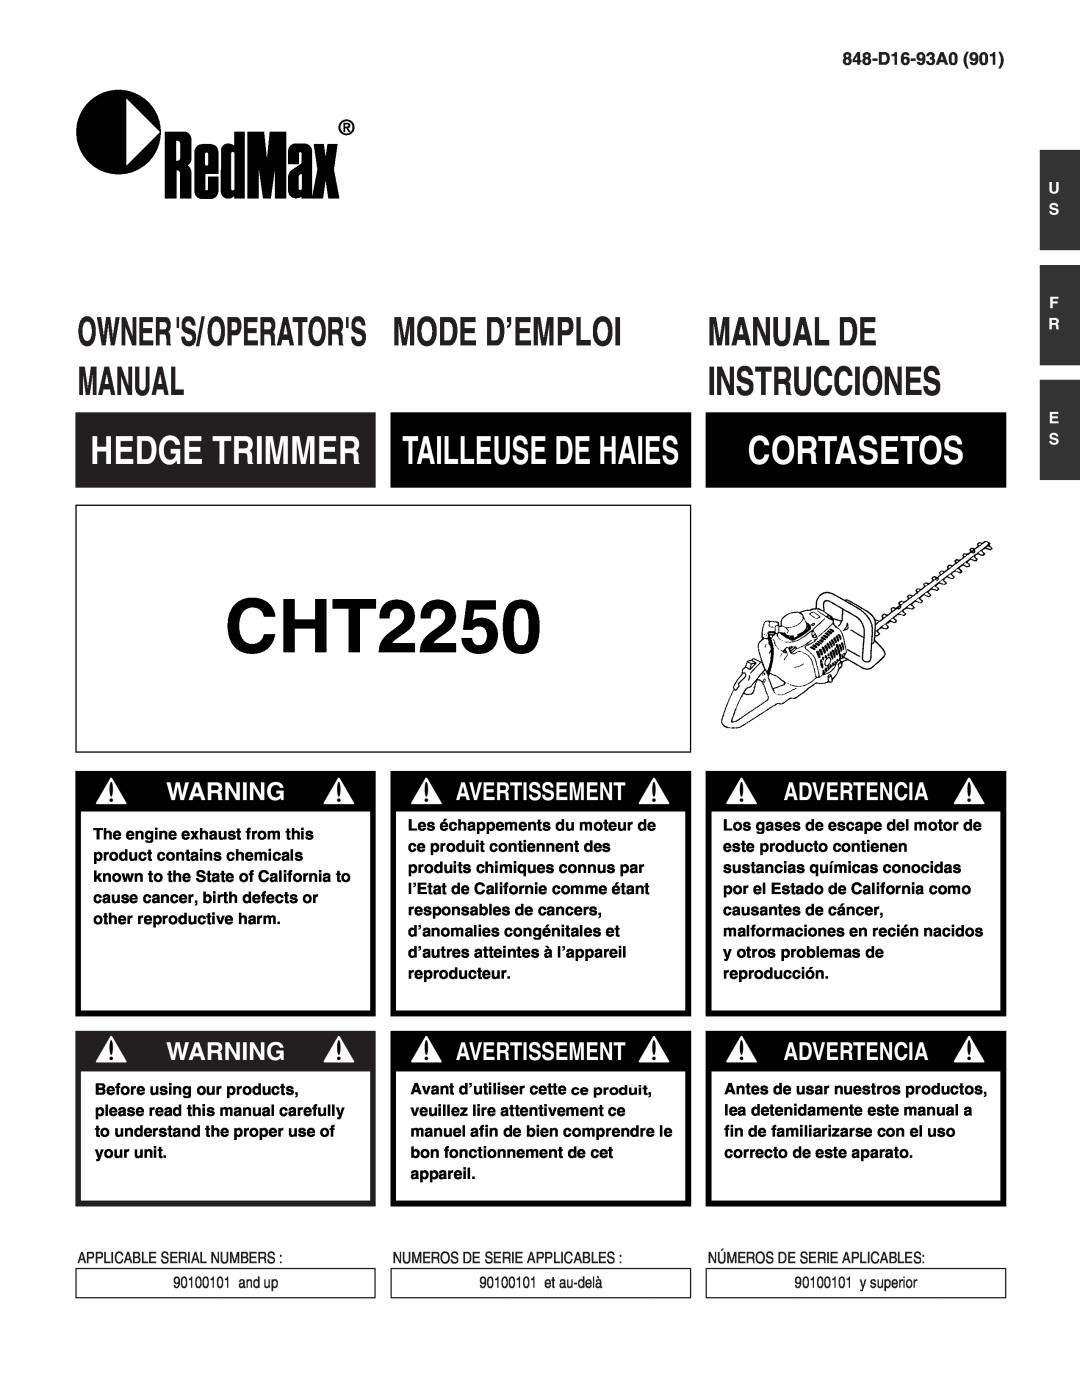 RedMax CHT2250 manual Manual De, Cortasetos, Hedge Trimmer, Tailleuse De Haies, Avertissement, Advertencia, 848-D16-93A0 